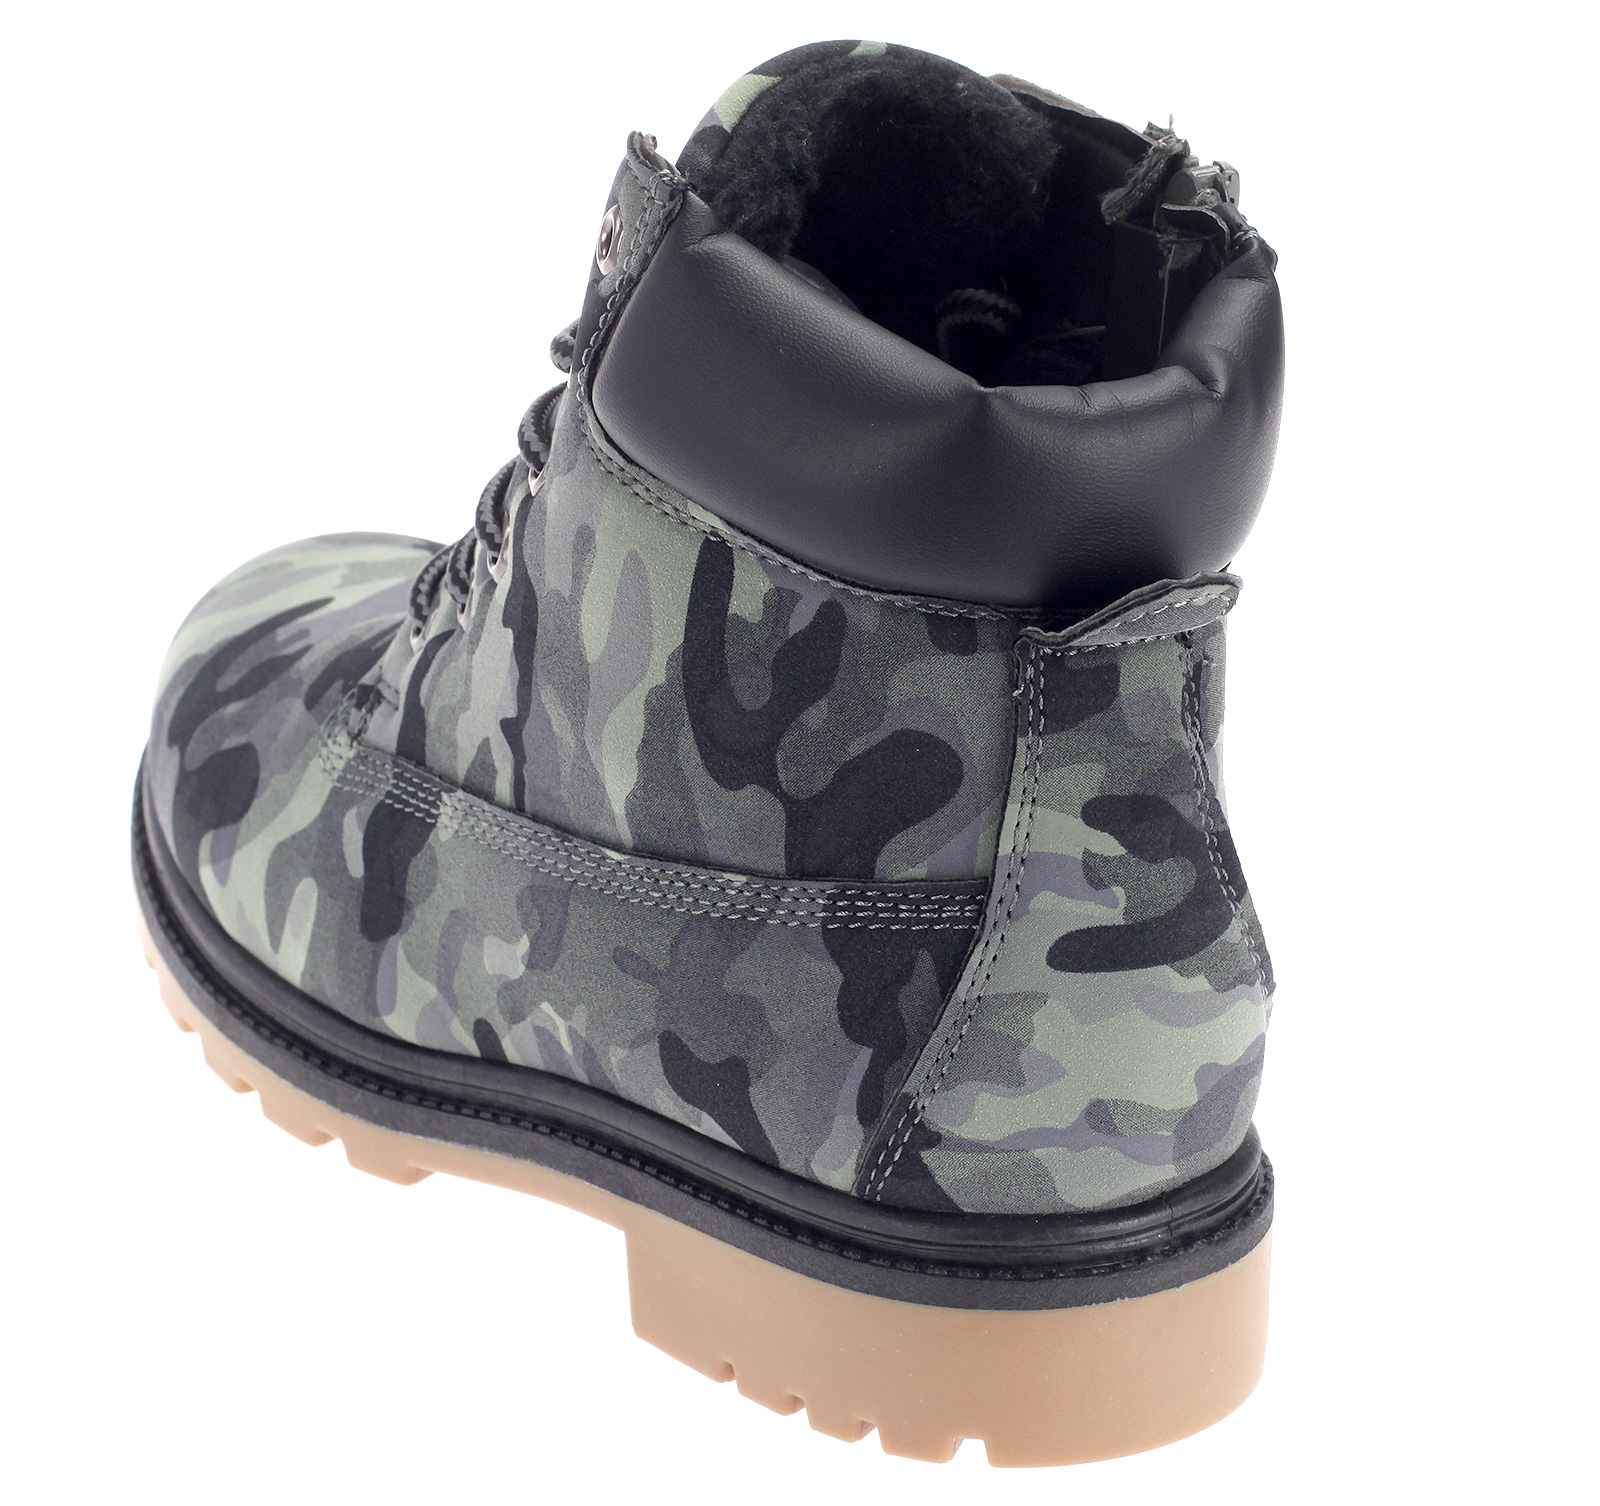 Damen Stiefeletten Gefütterte Winterschuhe Boots Stiefel Booty Schuhe Warmfutter LS02 LS10 LS12